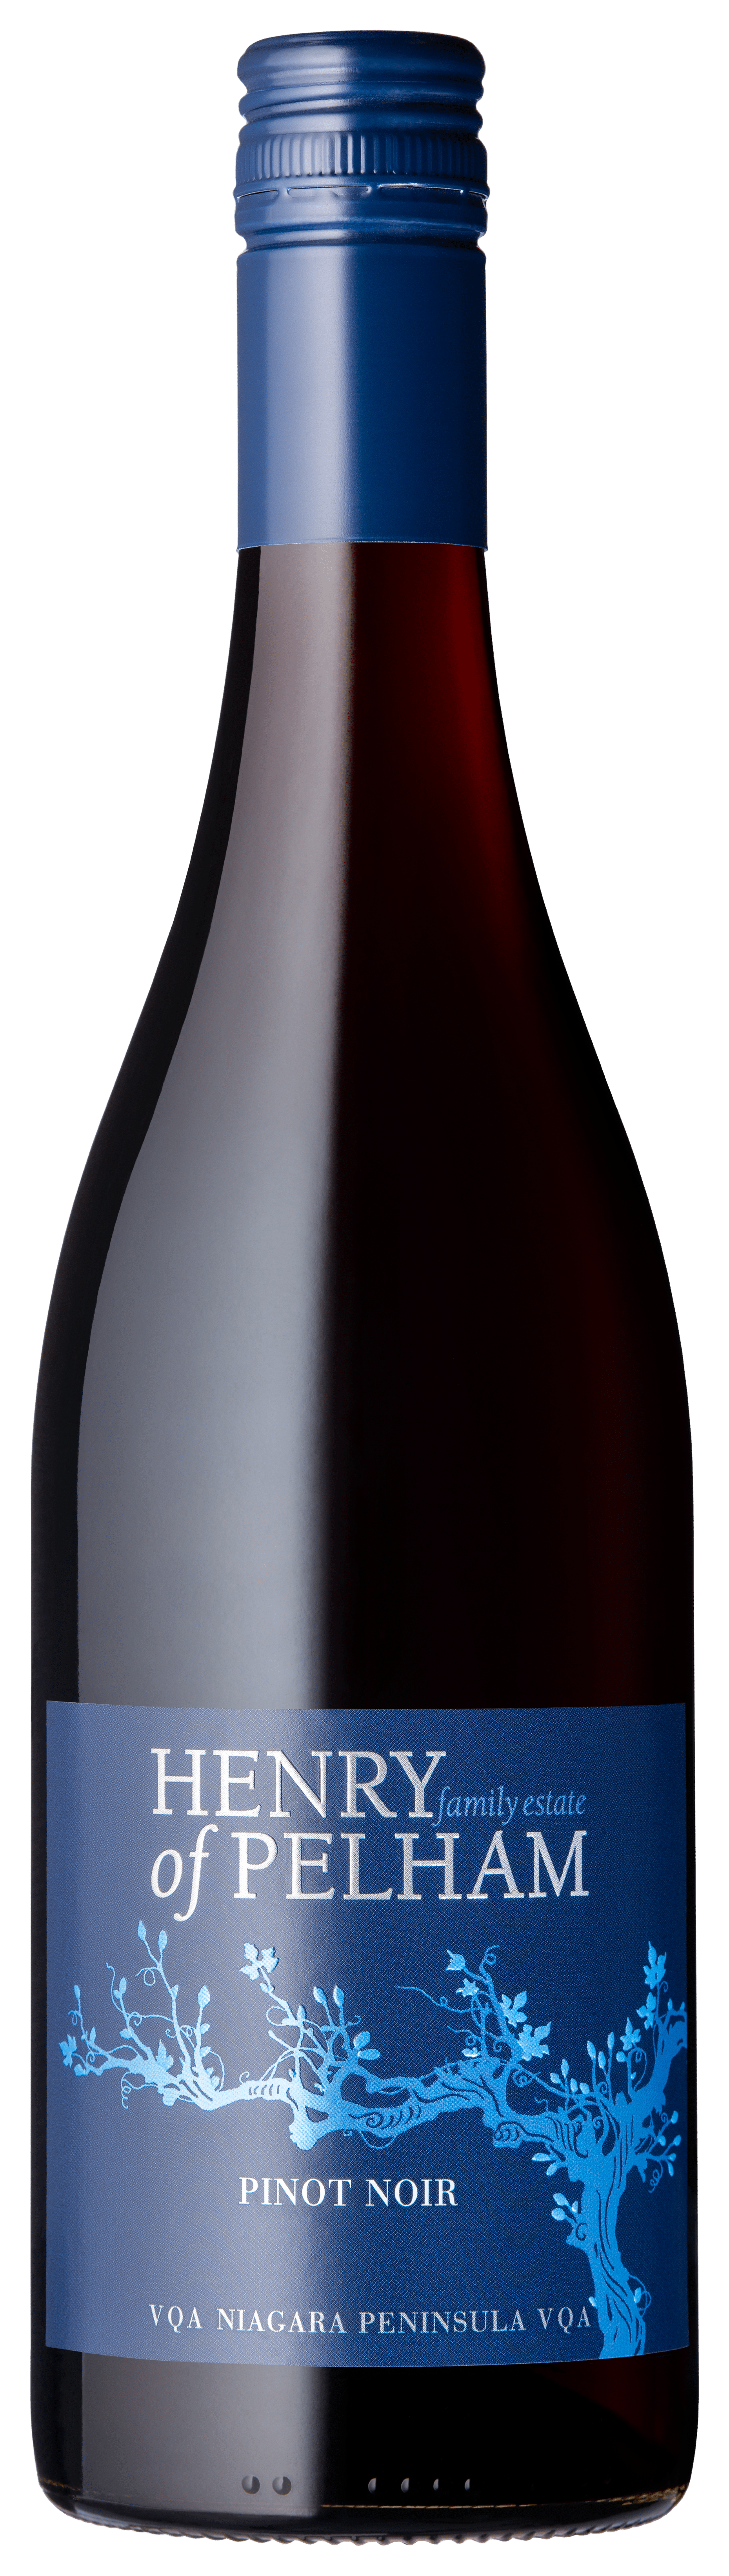 2021 Pinot Noir red wine recipessmooth red wineruffino red winerecipes with red winerecipe red winemedium-bodied red winesmooth red wine LCBOrecipe red wine